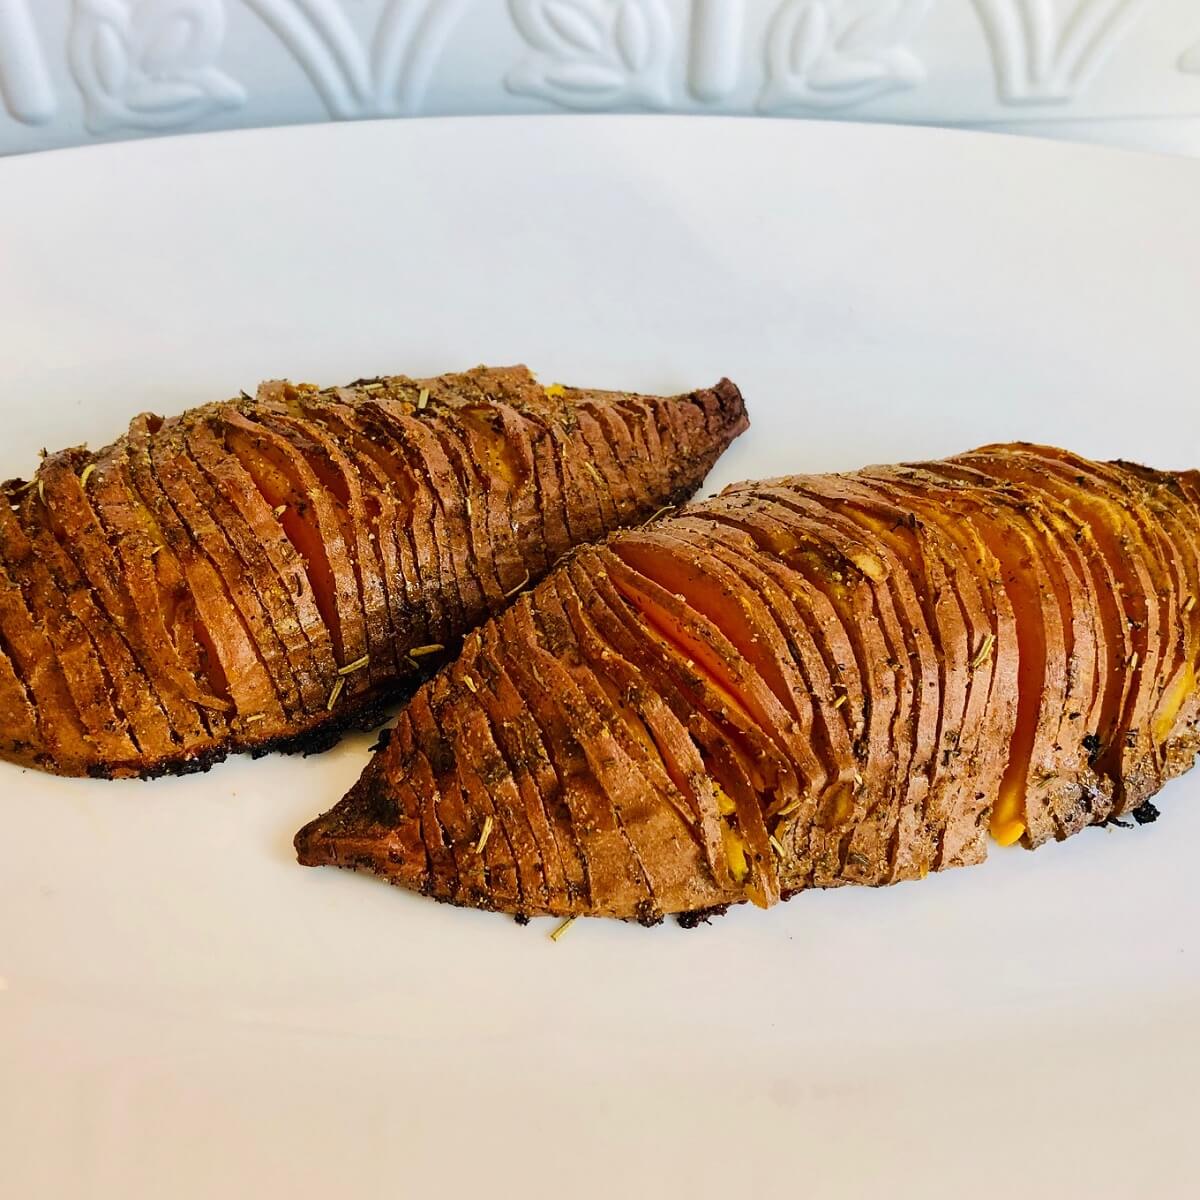 Two vegan hasselback sweet potatoes on a white platter.